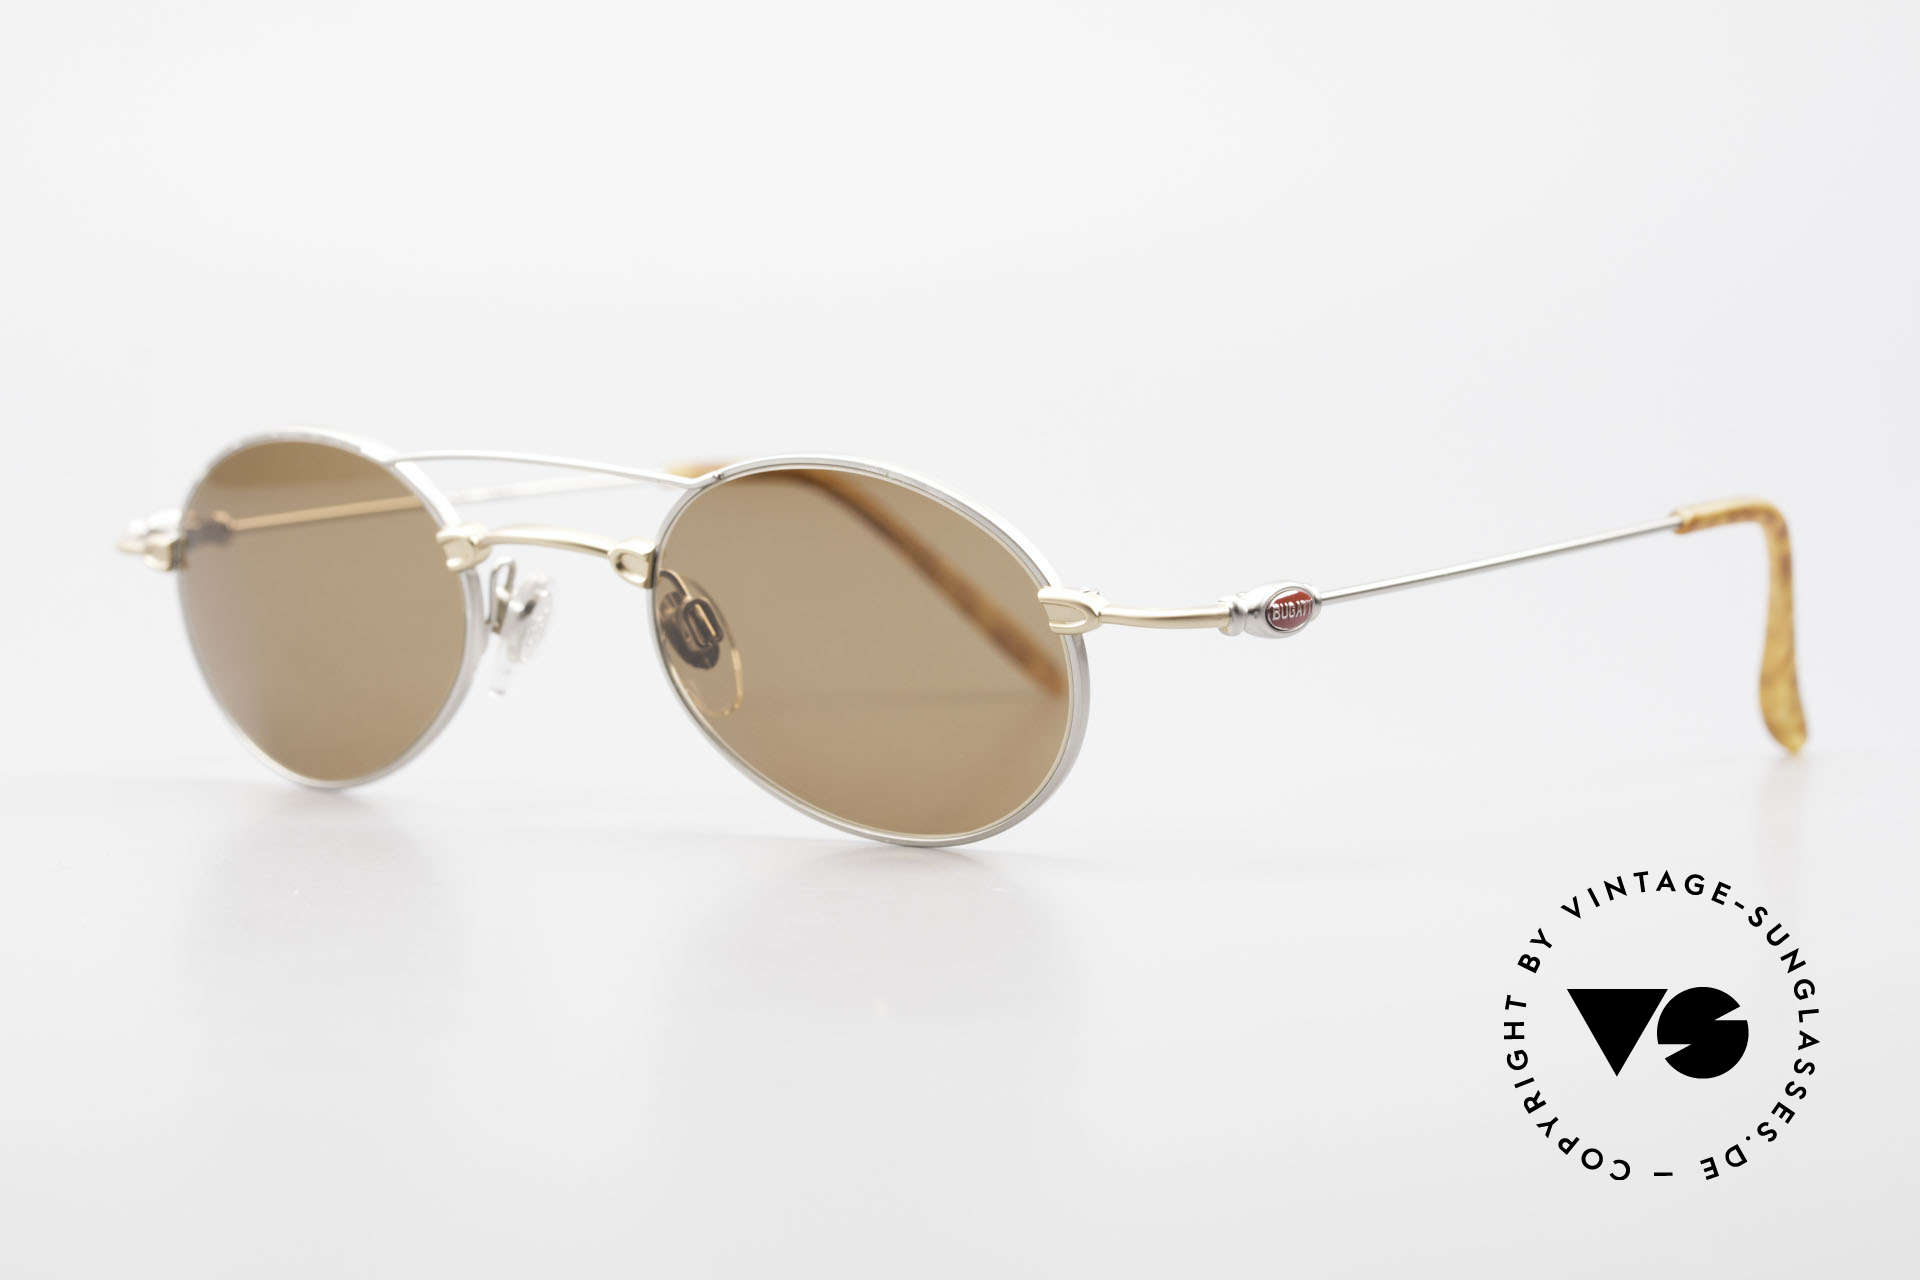 Bugatti 10868 Luxury Vintage Sunglasses 90s, classic and timeless design (gentlemen's sunglasses), Made for Men